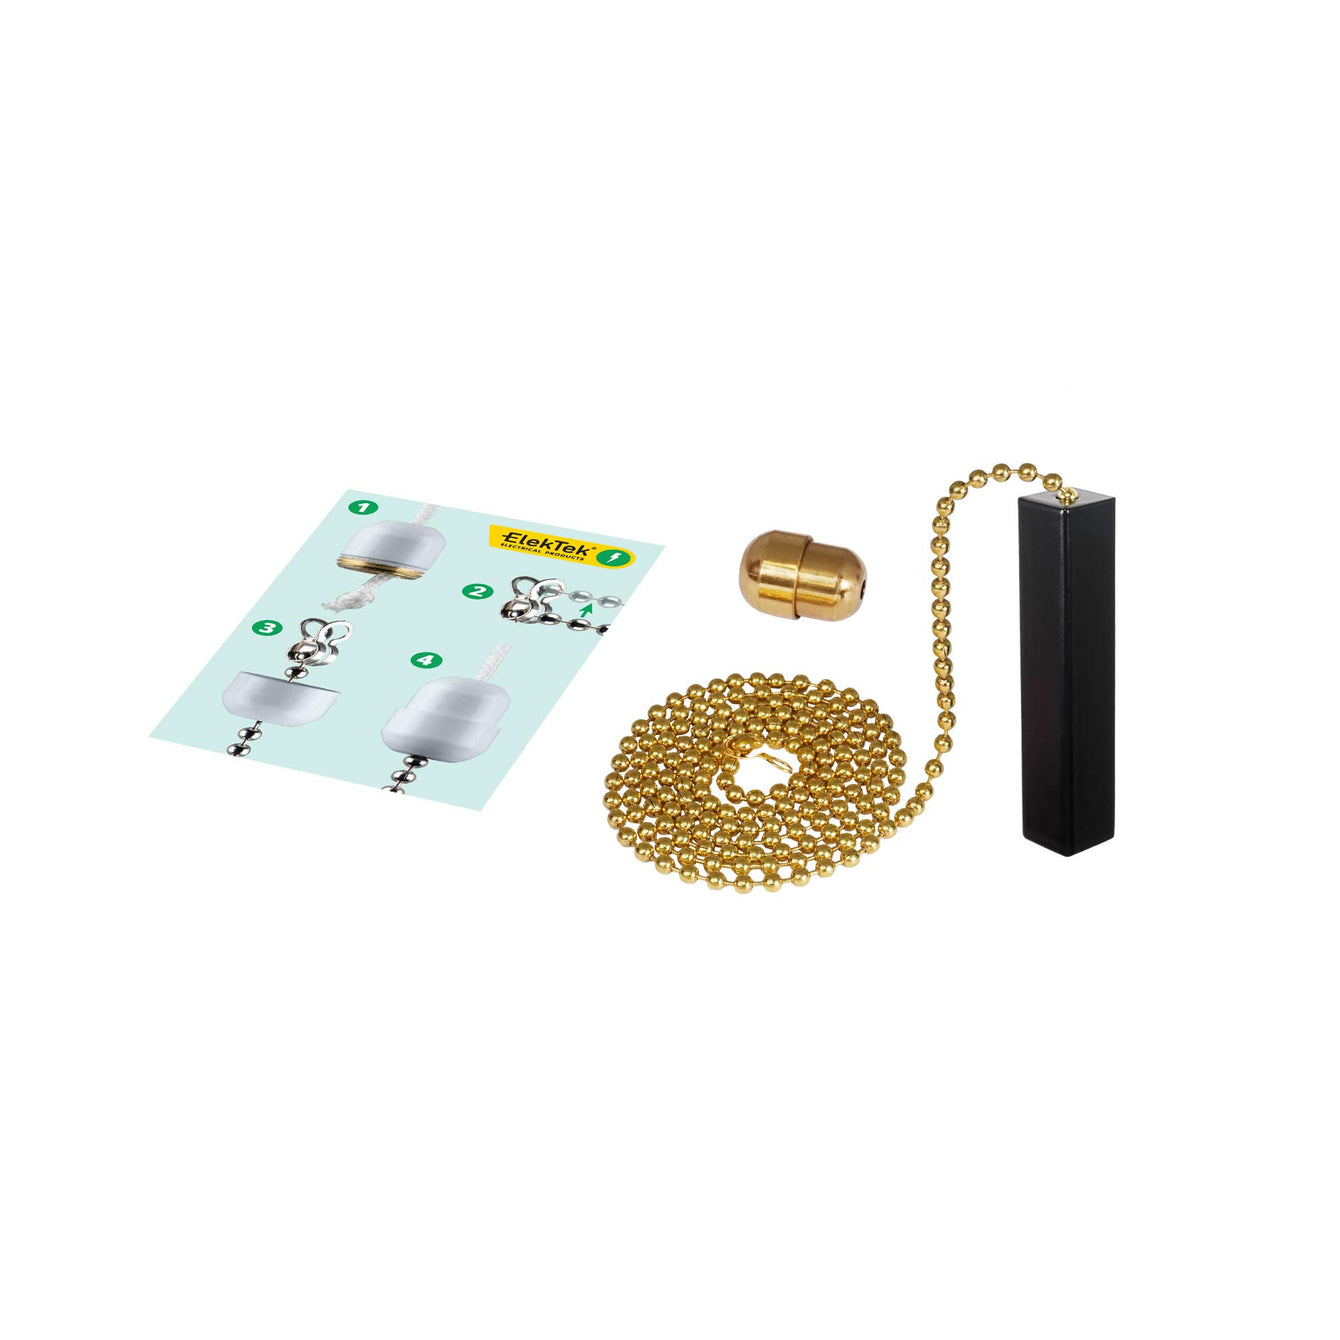 ElekTek Premium Black Bathroom Light Pull Cord Switch Kit with Pull Chain Handle Black Cylinder / Cord